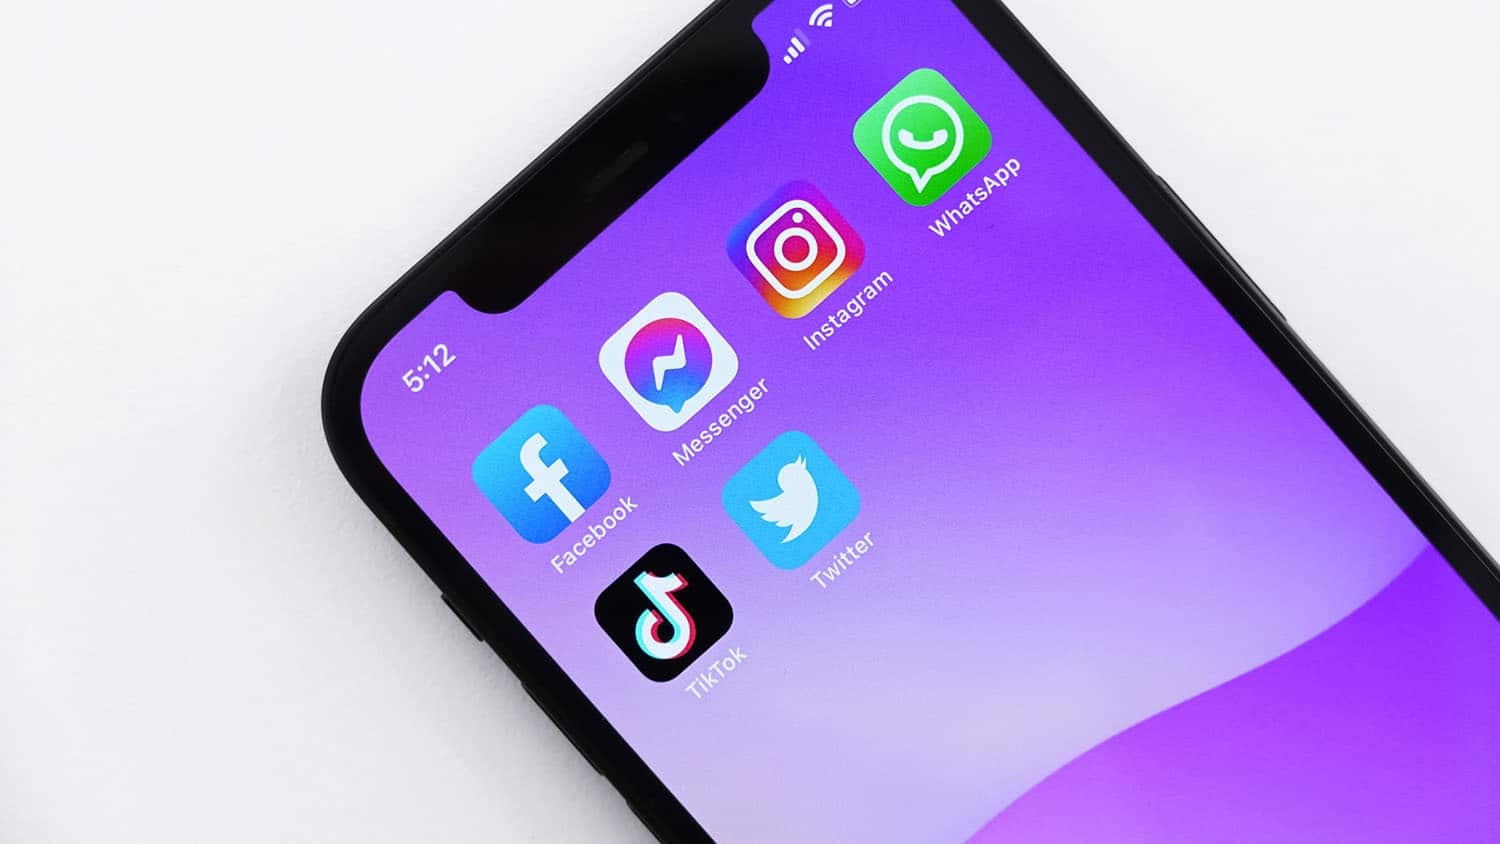 smartphone screen shows social media app icons